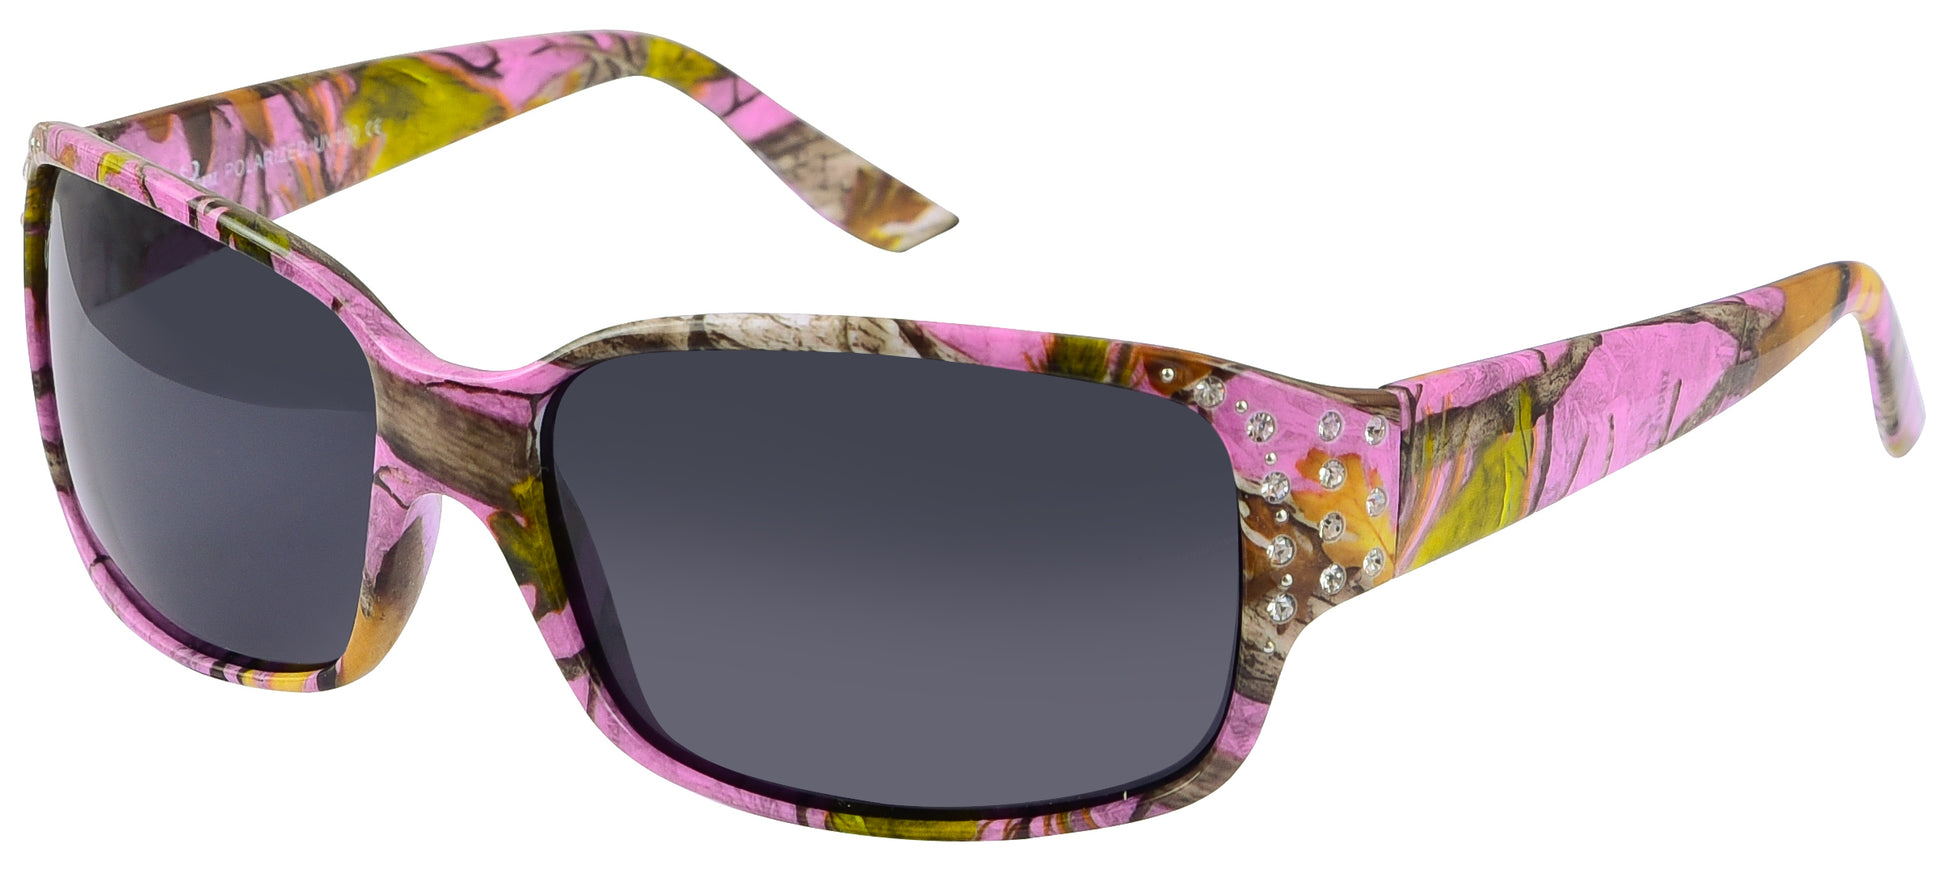 Main image: Polarized Purple Camo Sunglasses for Women - Diamante - Purple Camo Frame - Smoke Lens